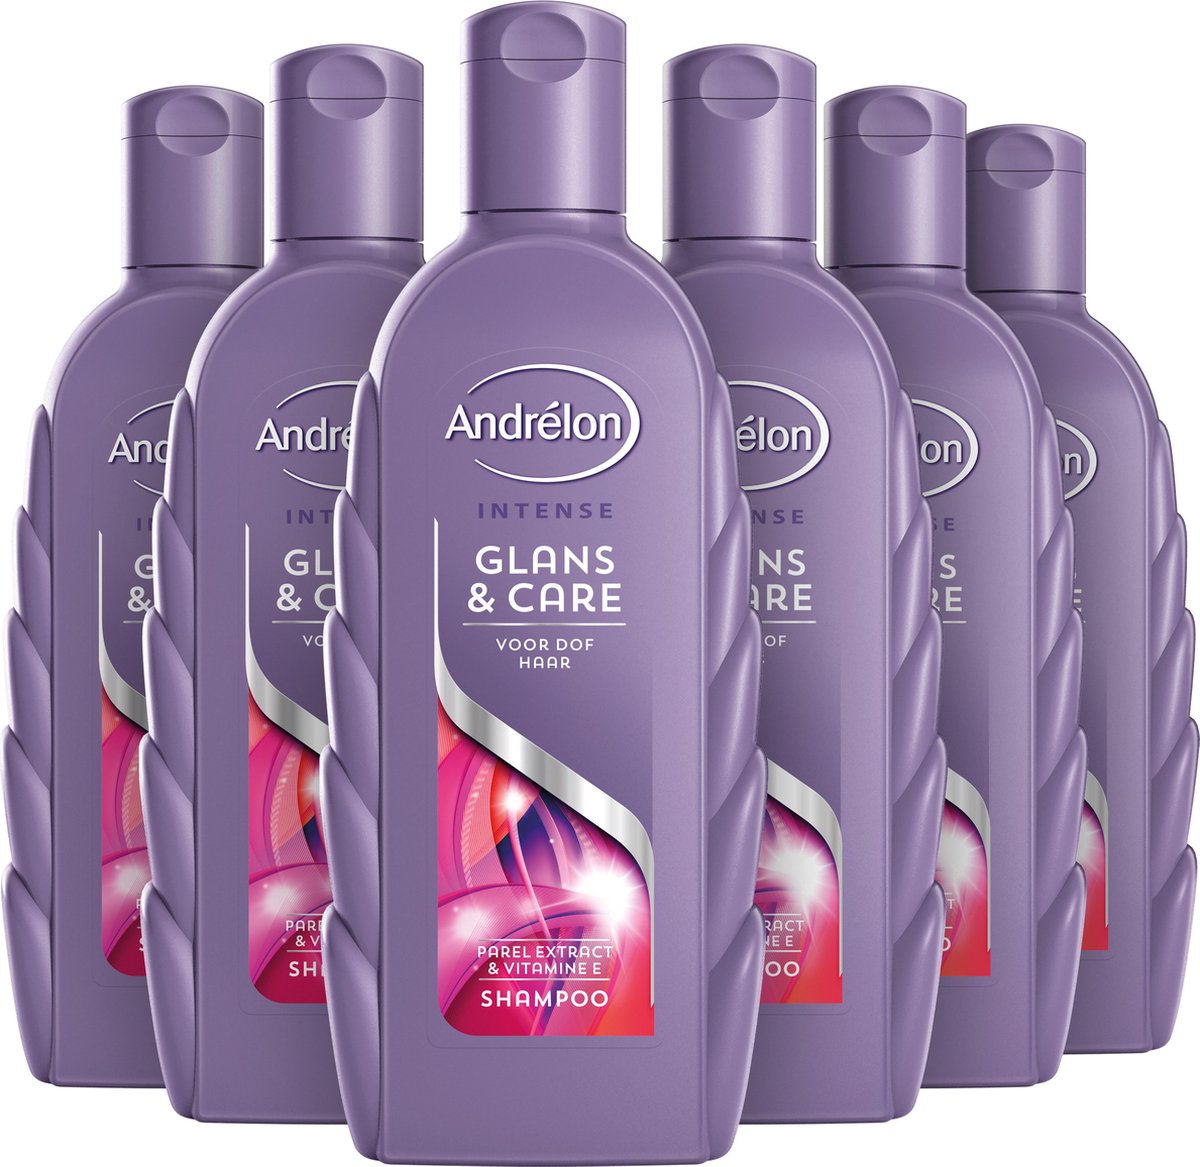 Andrélon Intense Glans & Care Shampoo - 6 x 300 ml - Voordeelverpakking